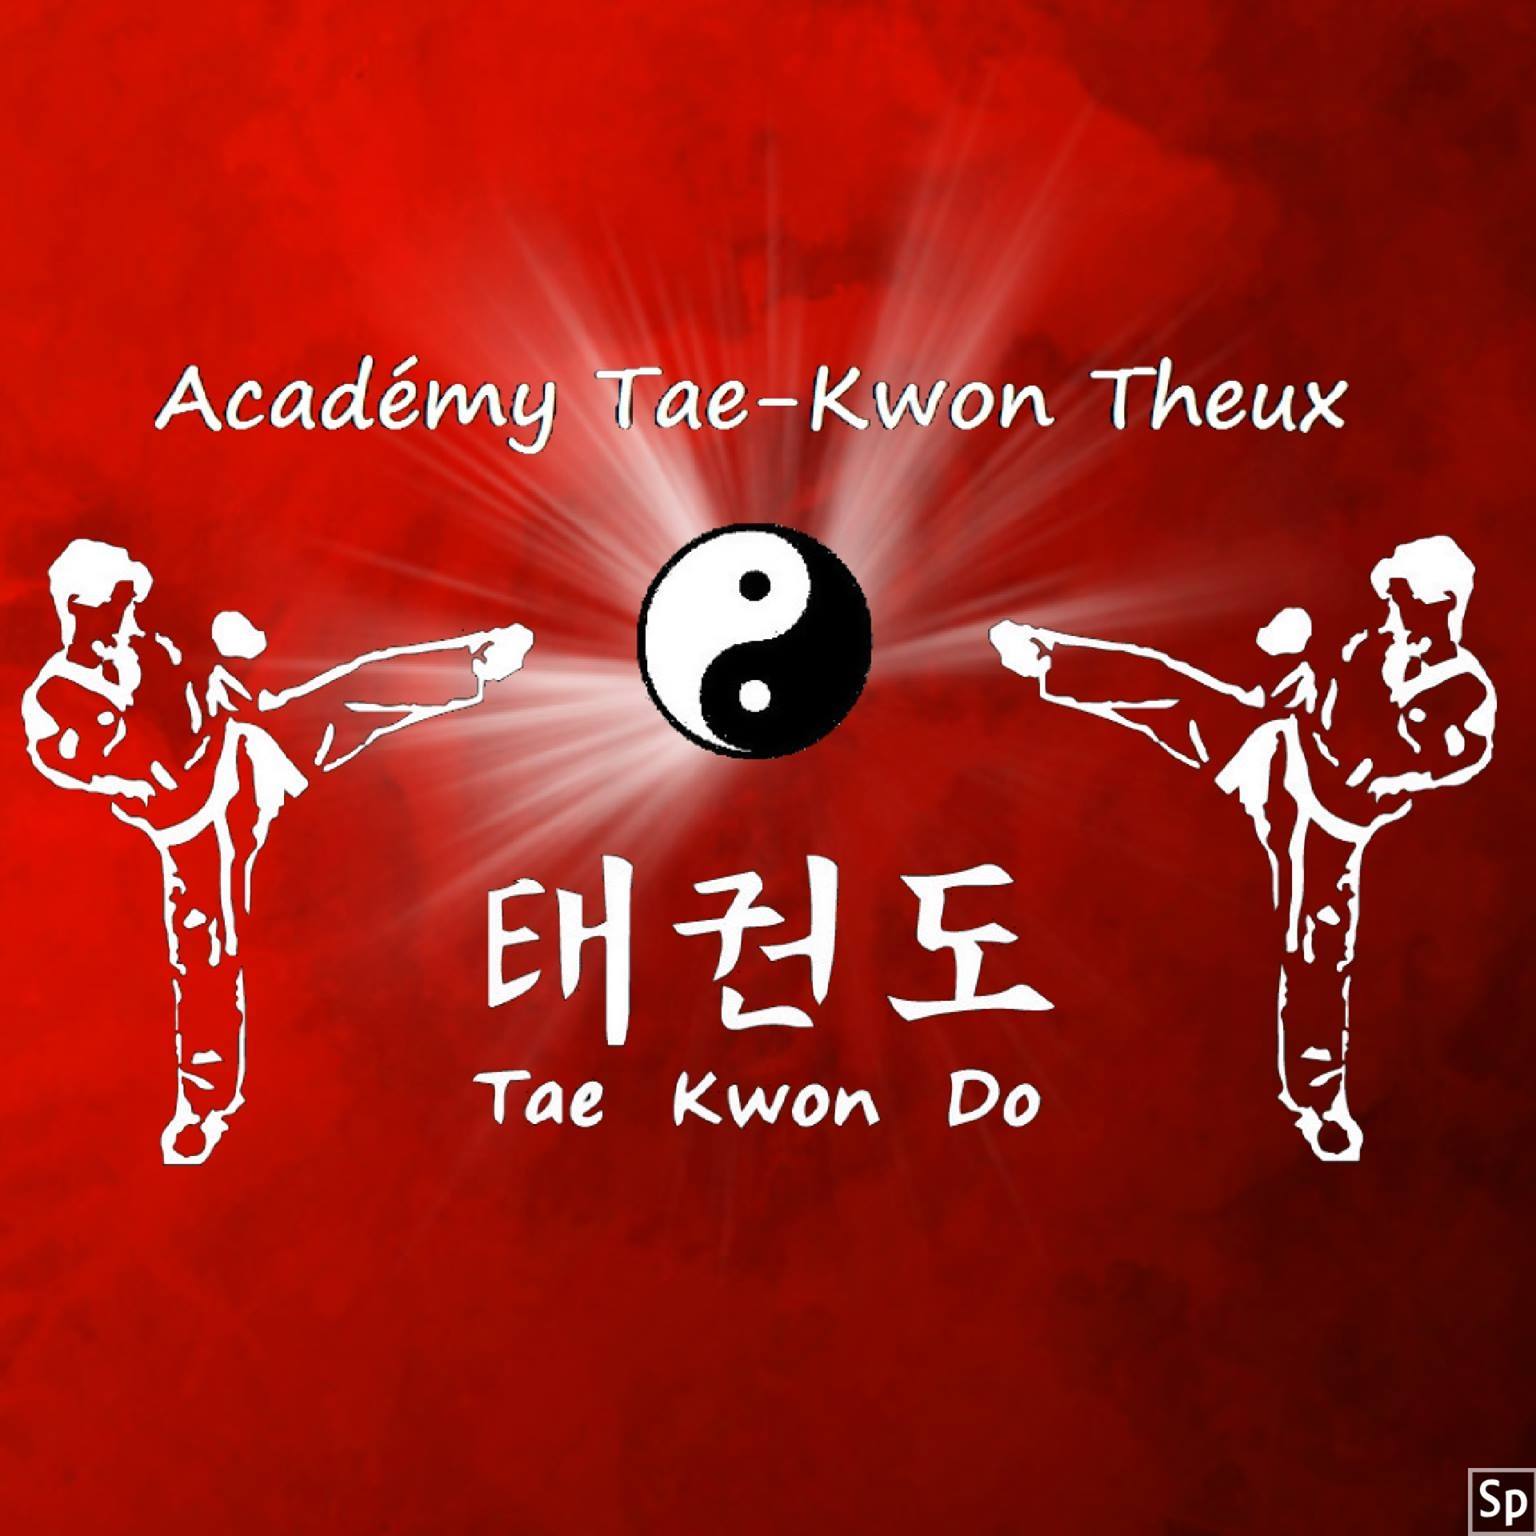 Academy tae-kwon theux